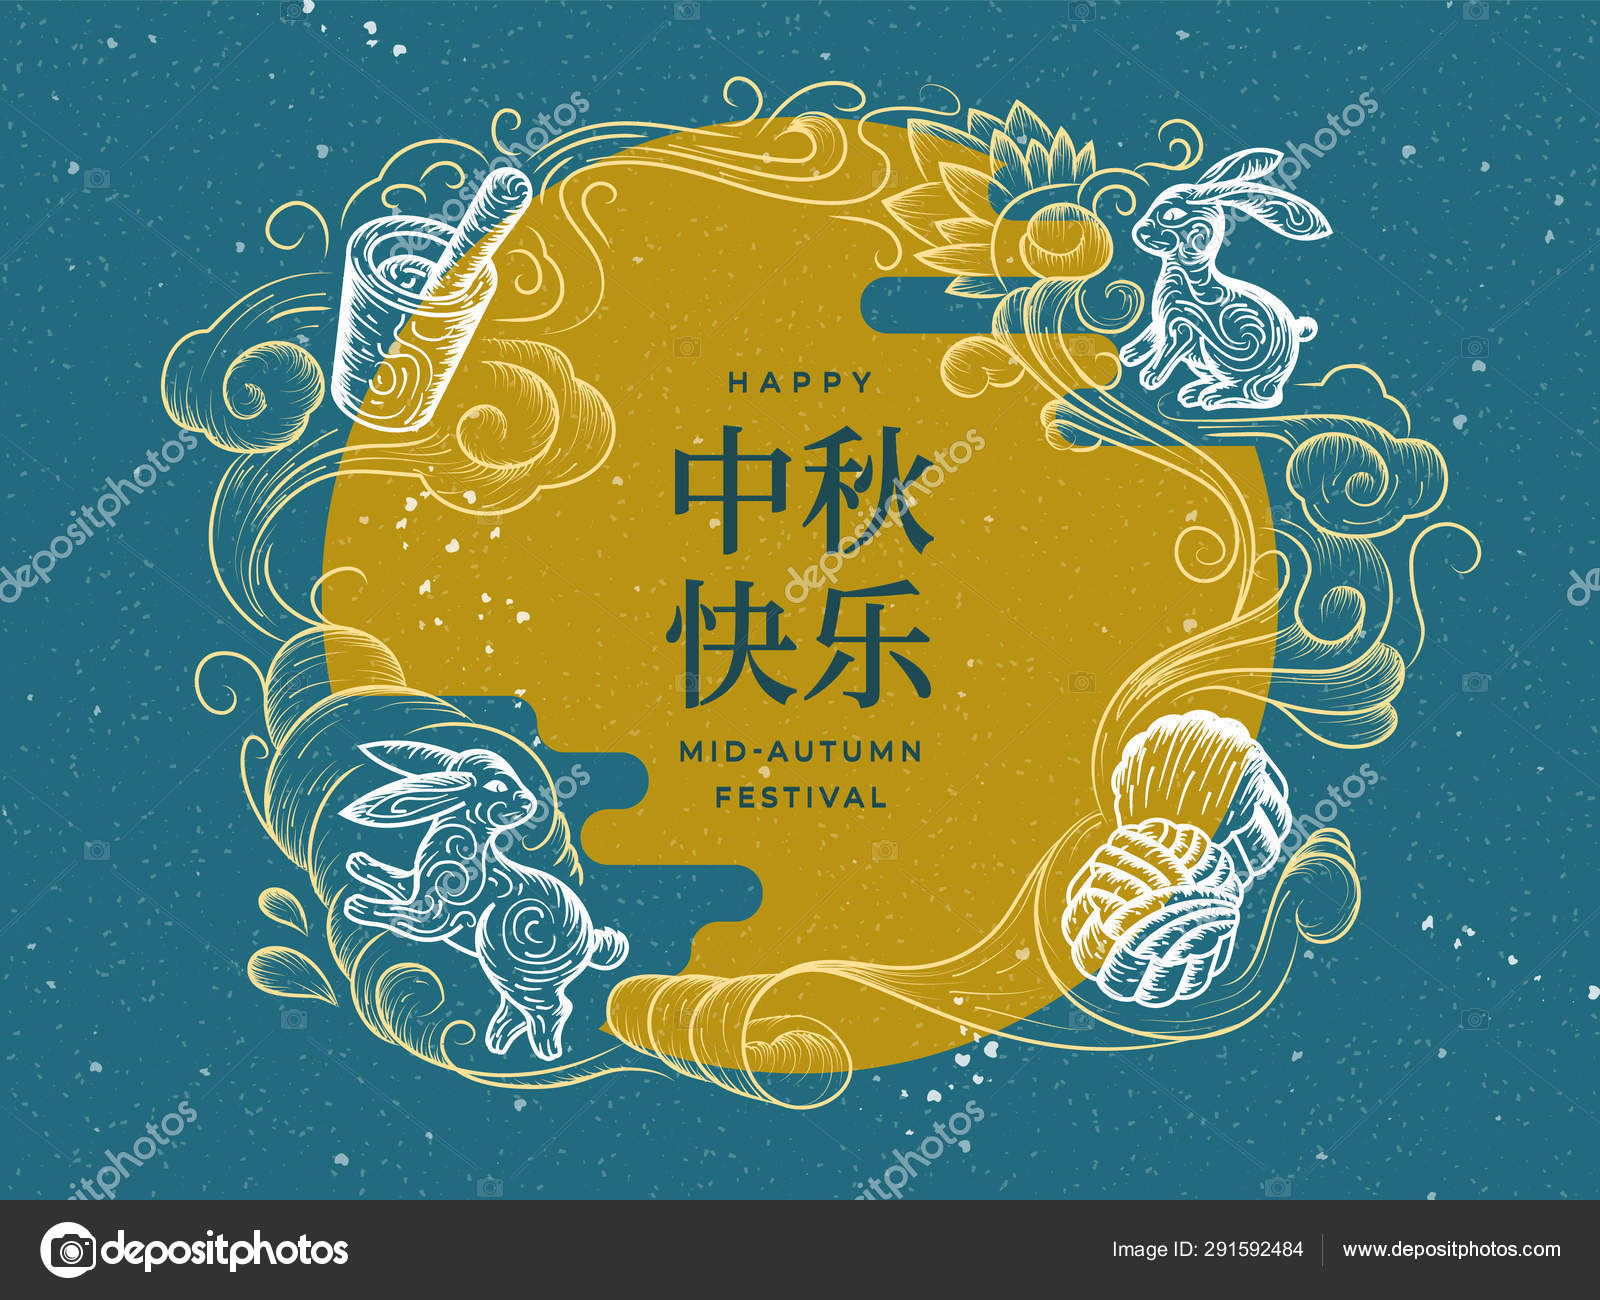 中秋 节 background